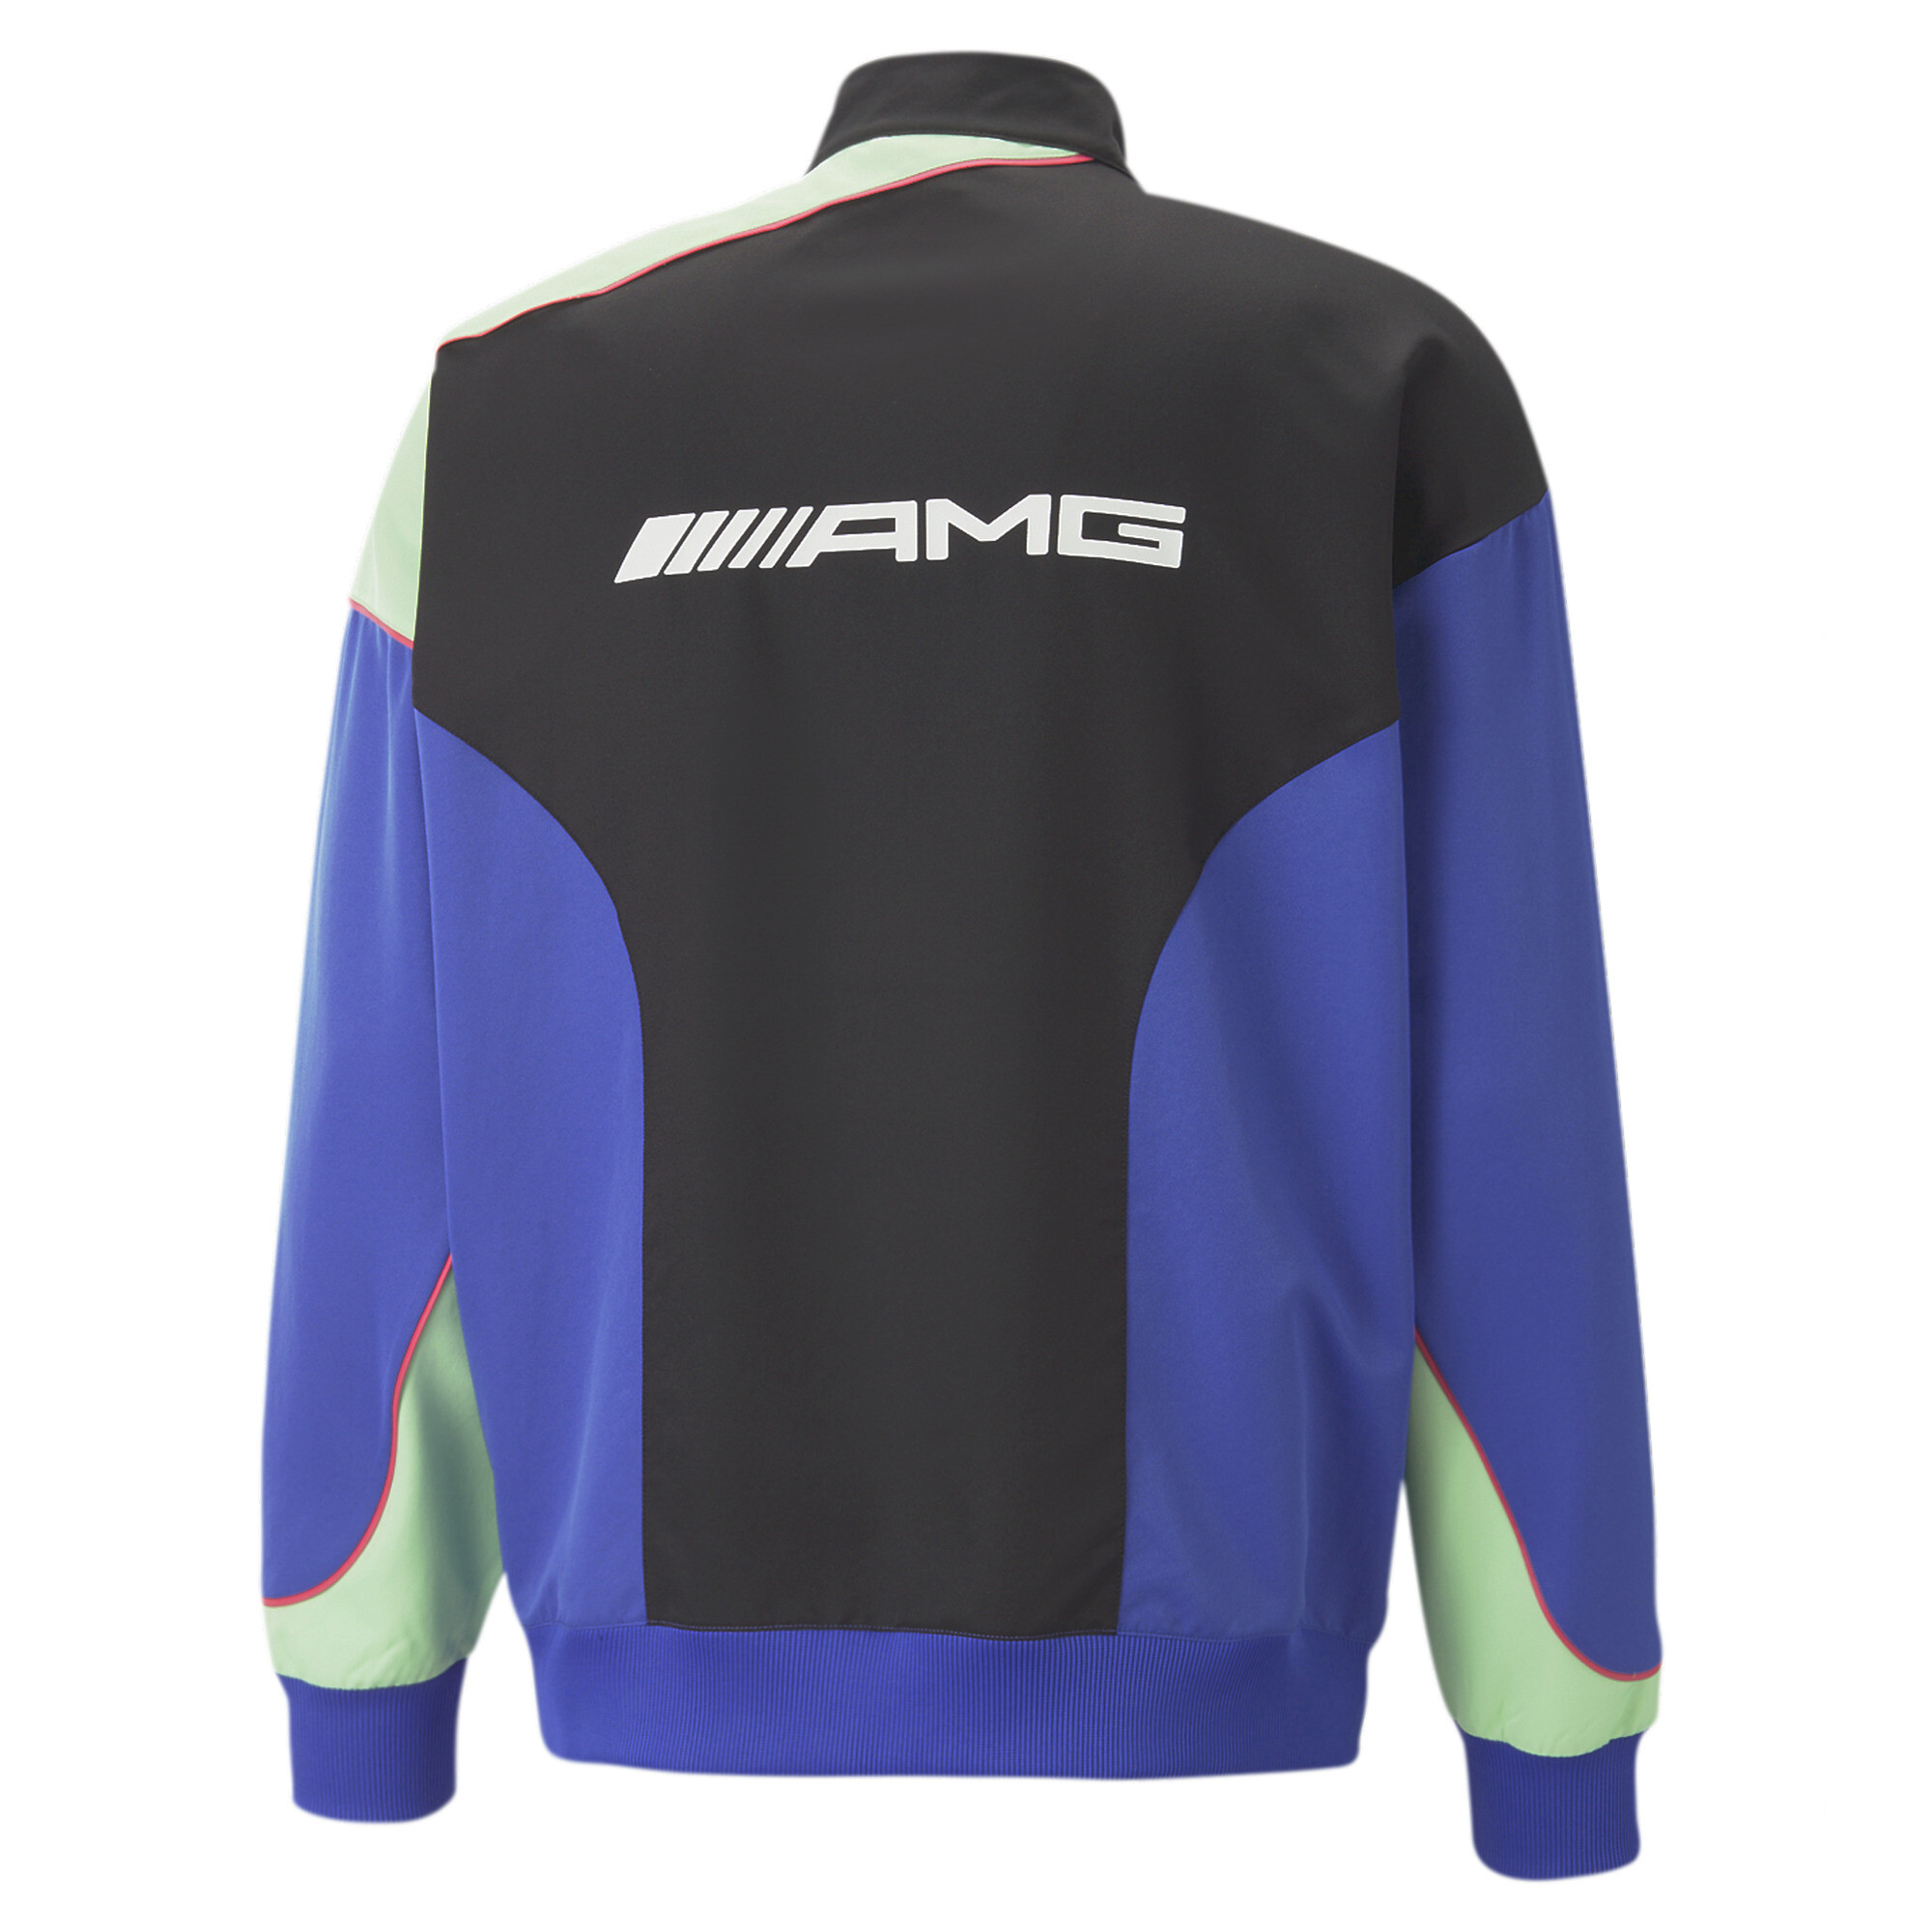 Men's PUMA Mercedes-AMG Motorsport Woven Jacket Men In Blue, Size XS